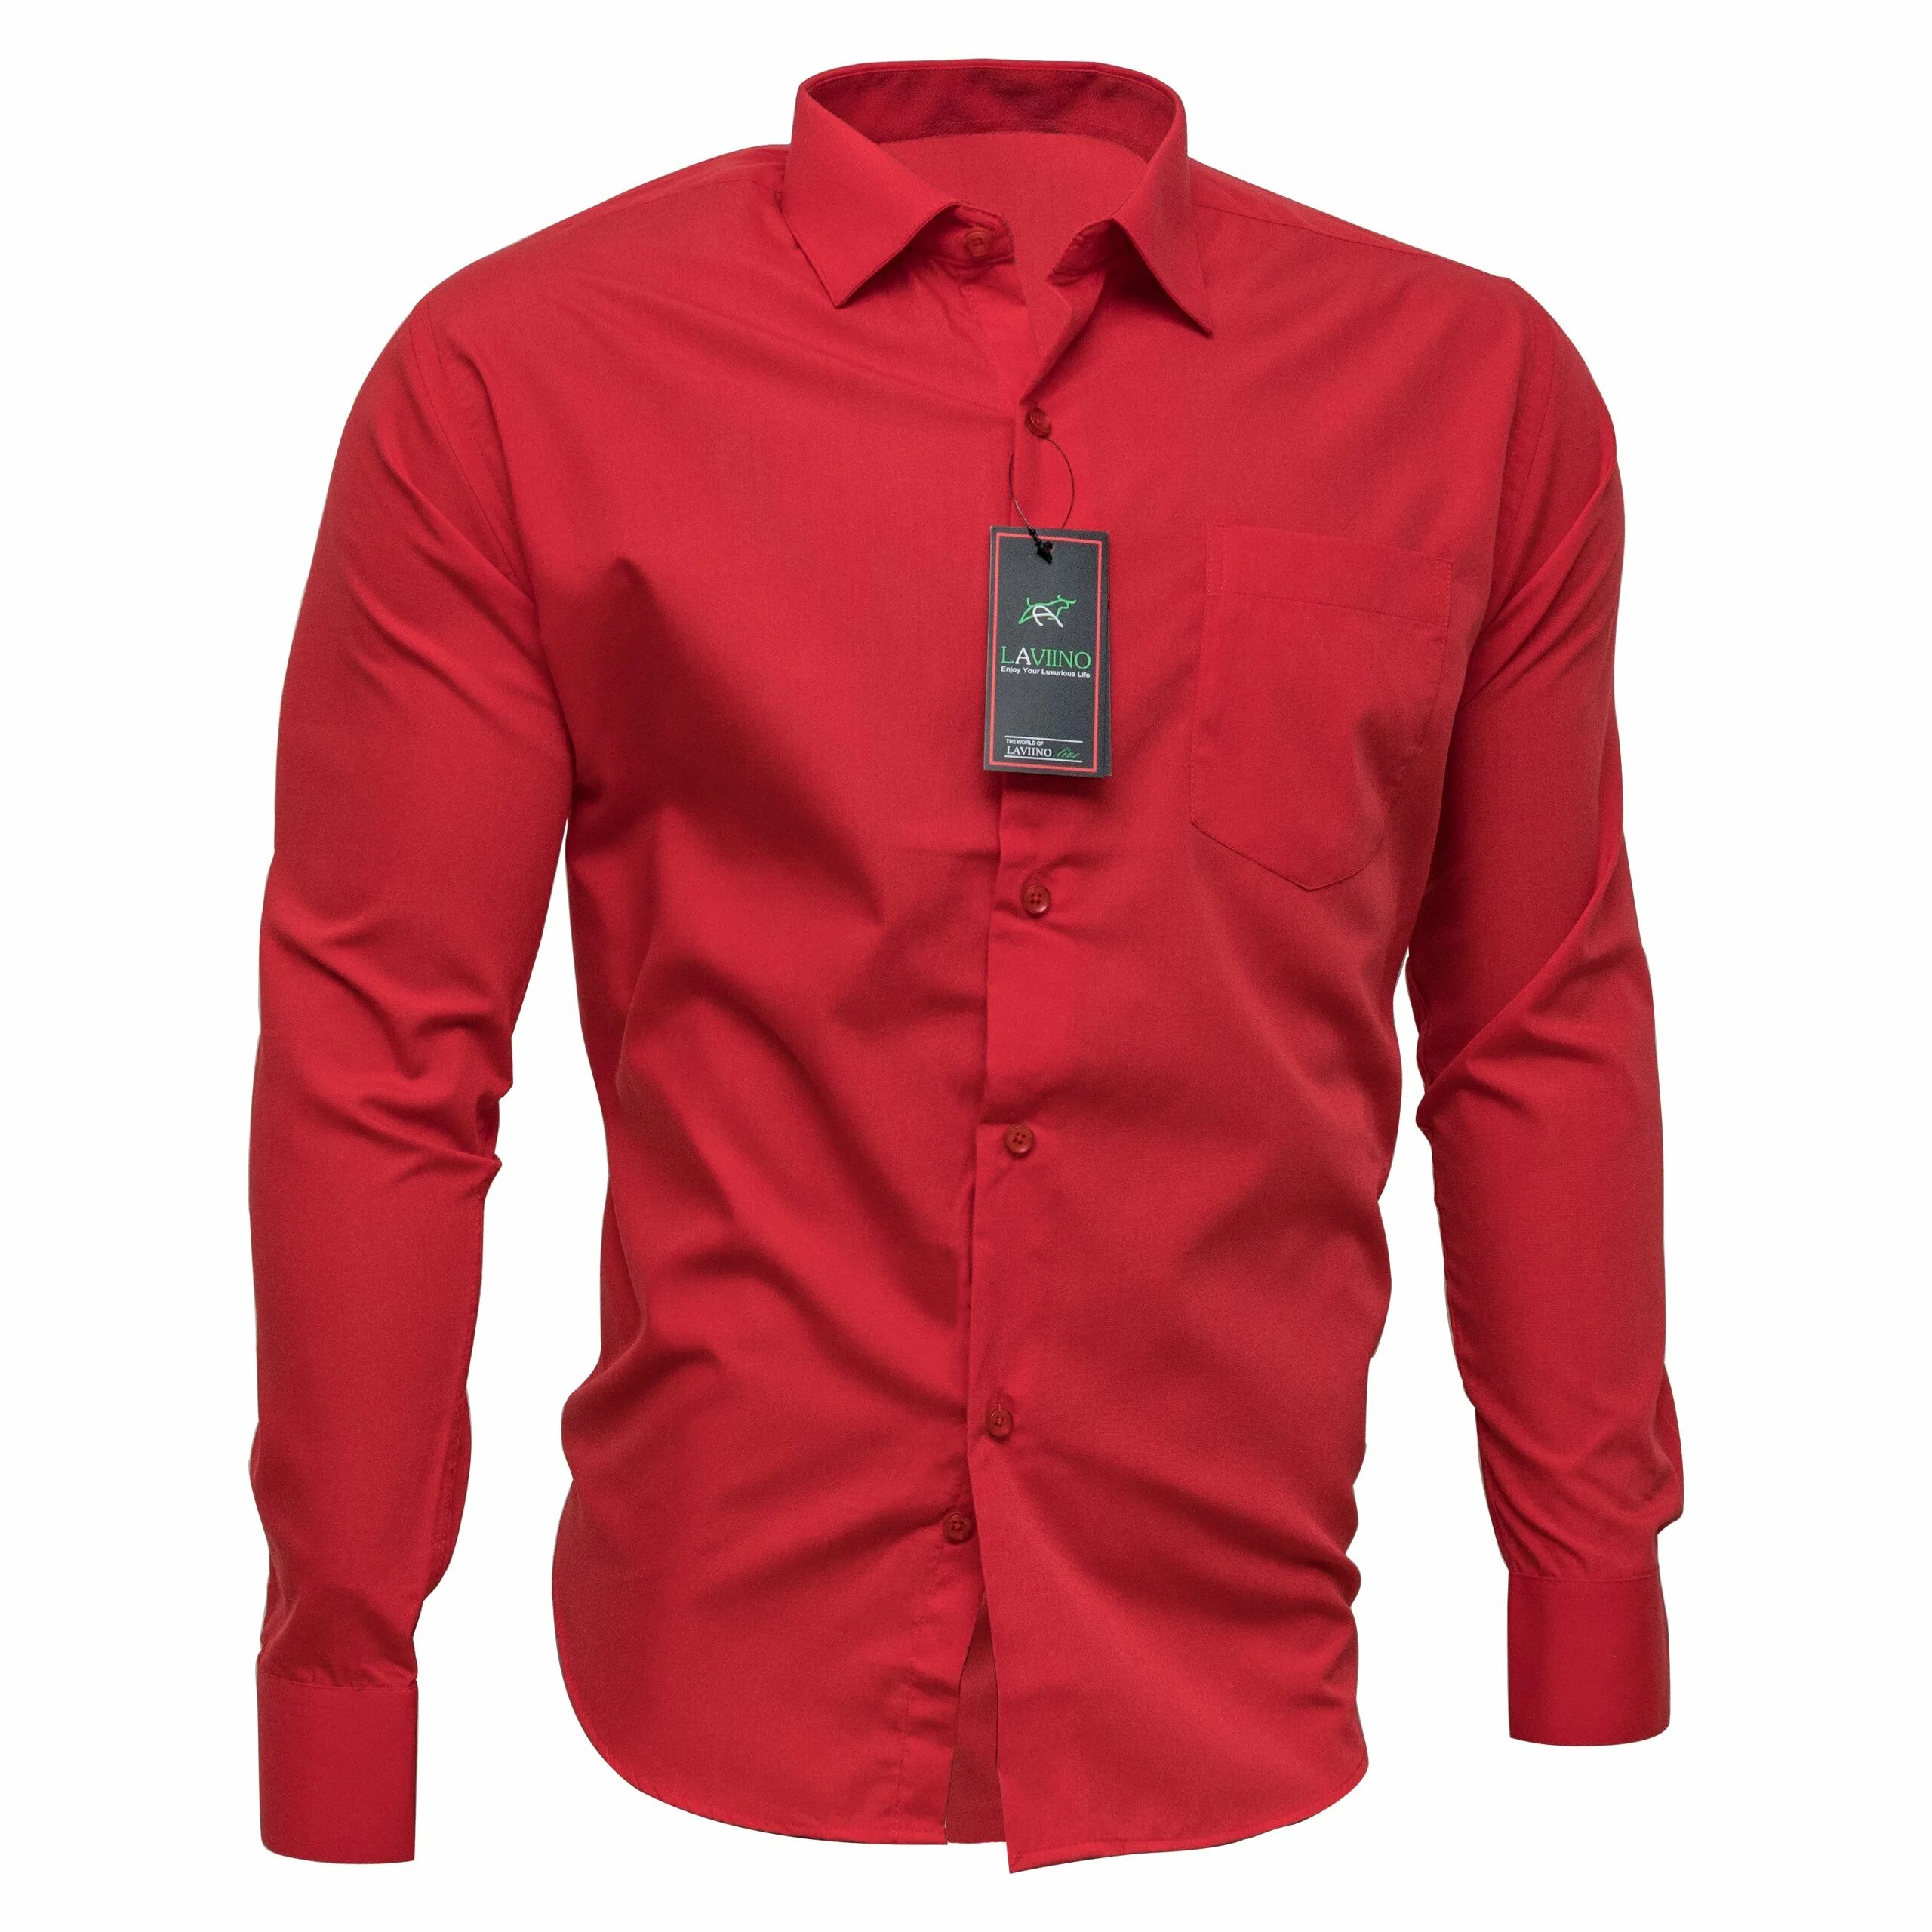 Красная рубашка текст. Рубашка мужская MCR красная. Рубашка мужская с длинным рукавом красная. Красная рубашка мужская классическая. Мужская рубашка красного цвета.